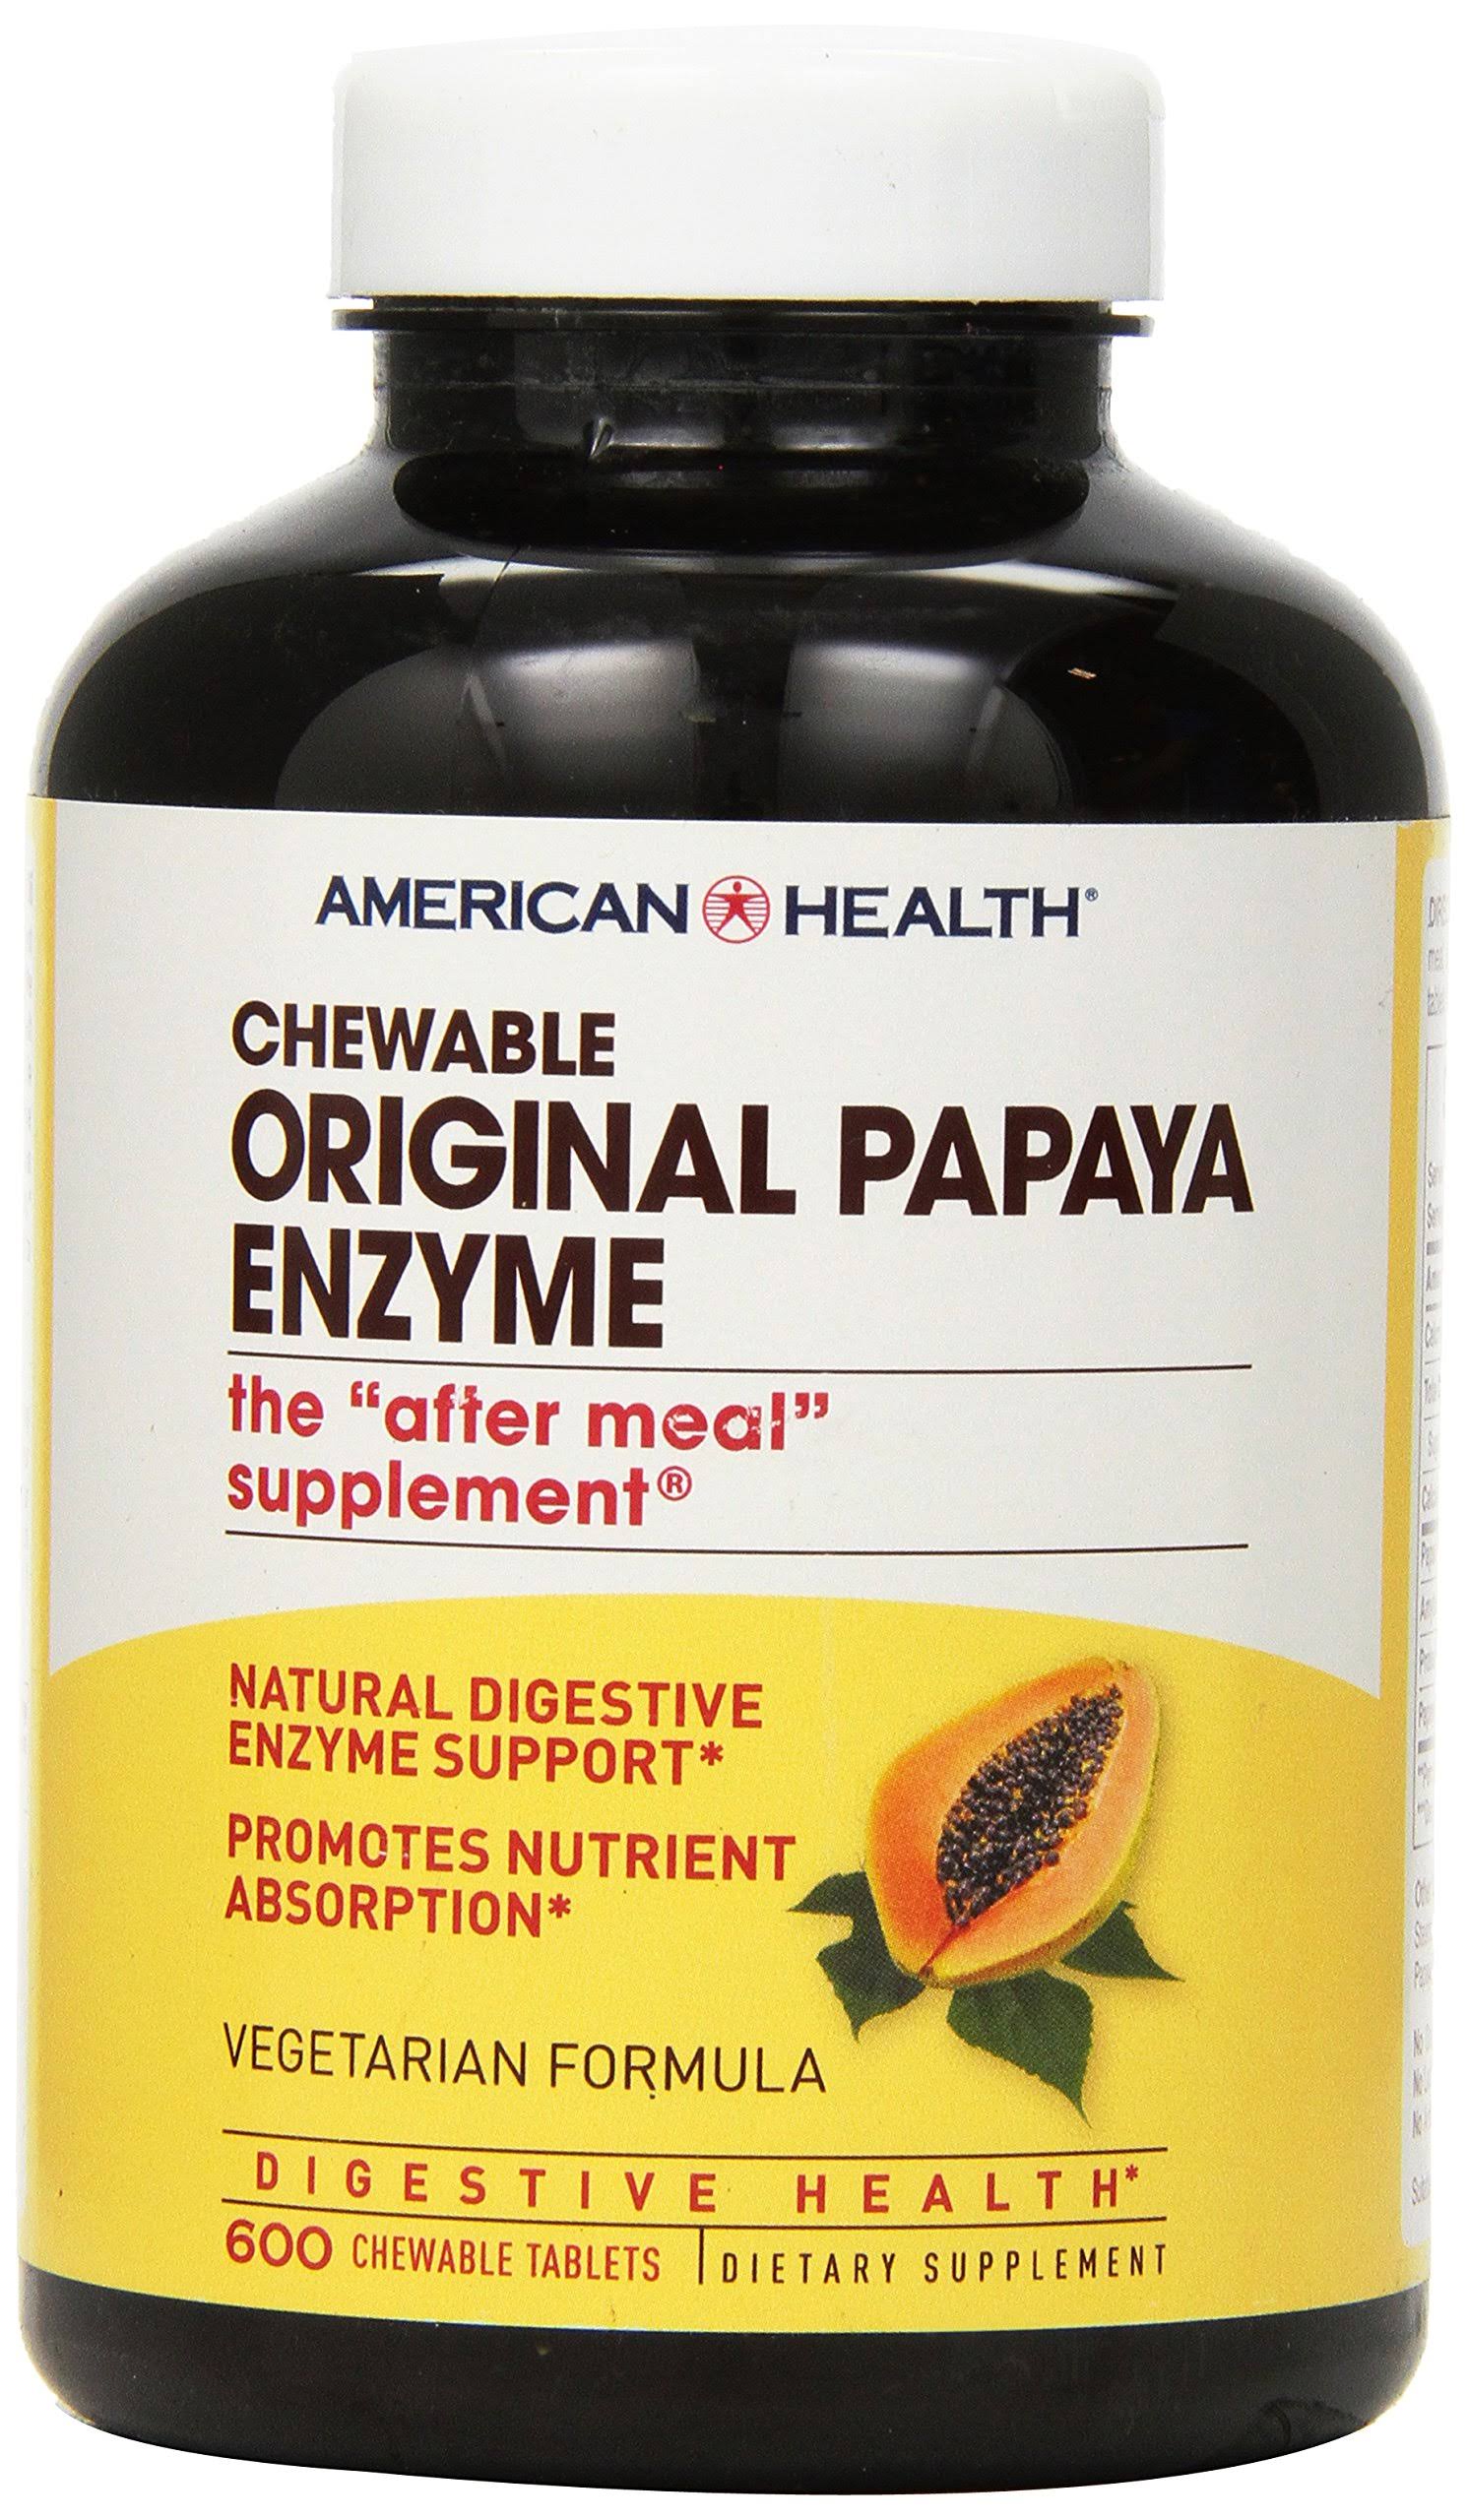 American Health Original Papaya Enzyme - 600 Chewable Tablets